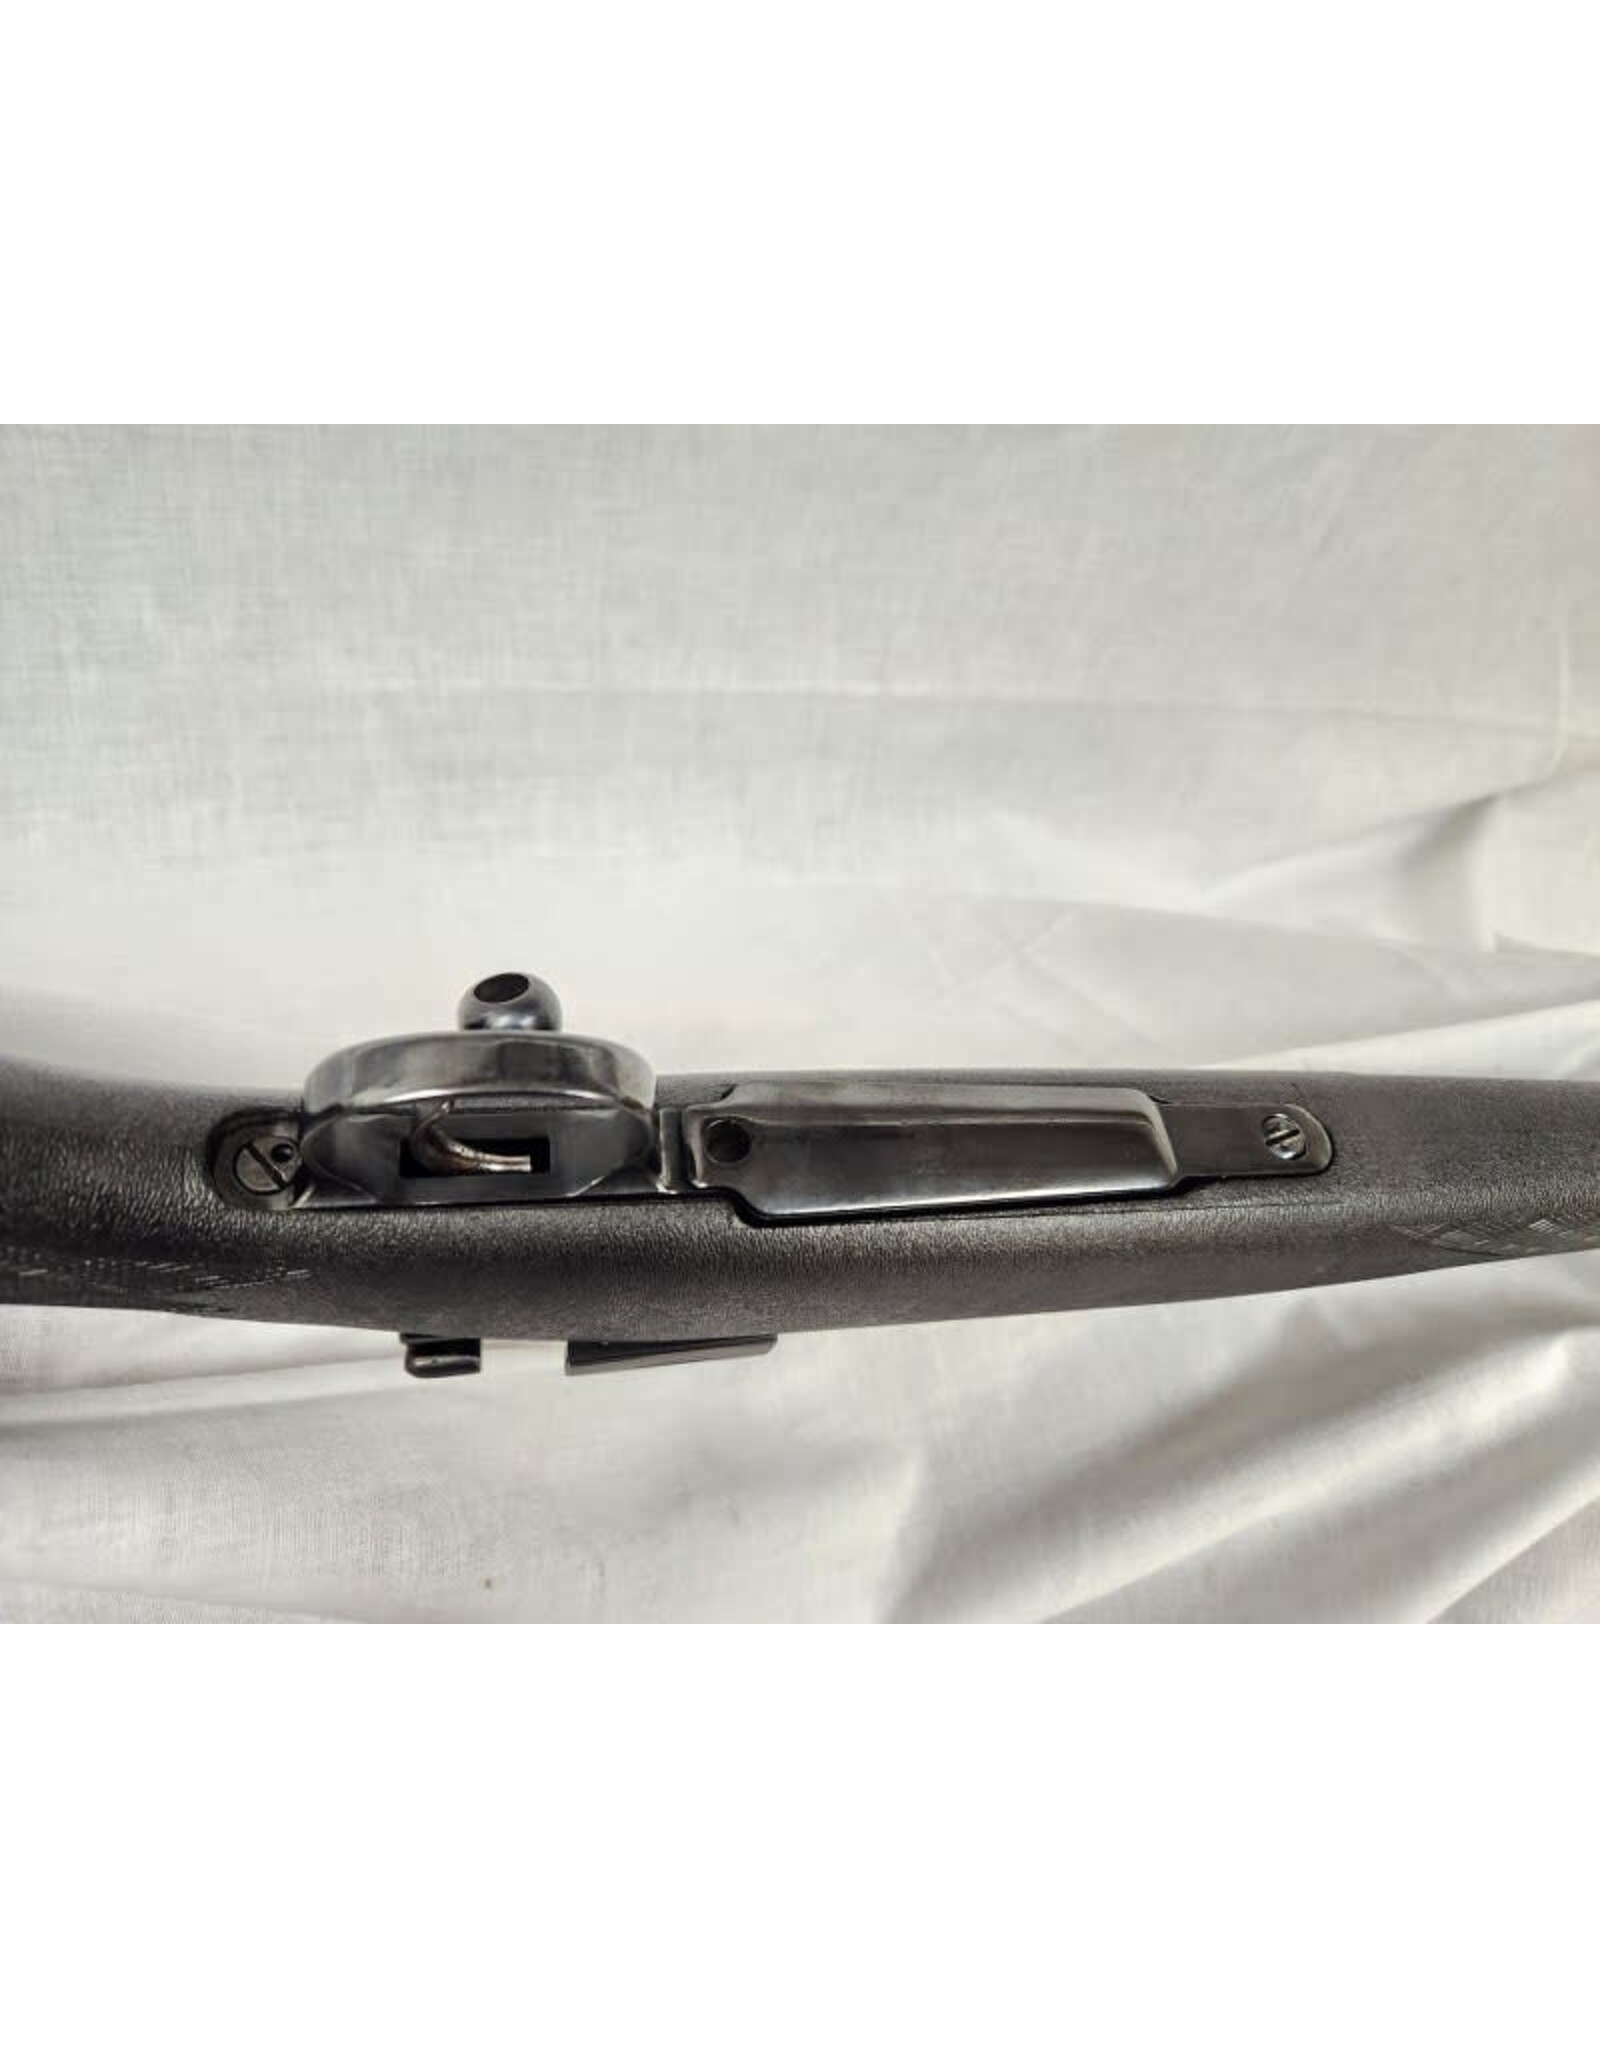 Mauser Mod. 98 - .30-06 Spg. 22" bbl 13-1/4" LOP Ram-Line Stock